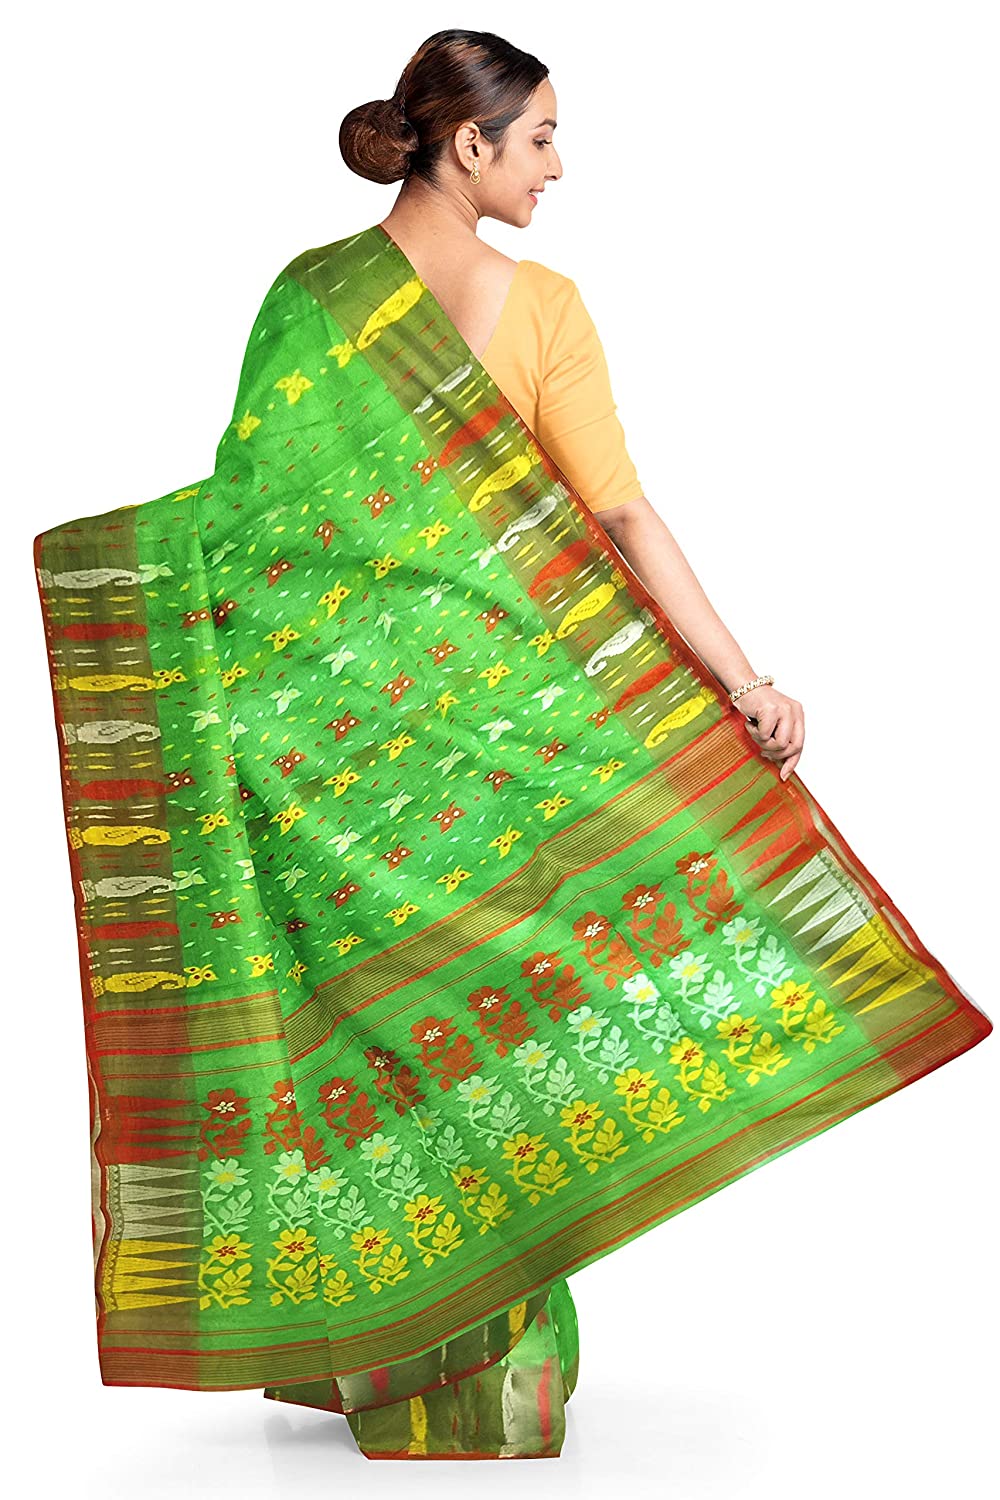 Pradip Fabrics Ethnic Women's Tant Jamdani Green Color Saree